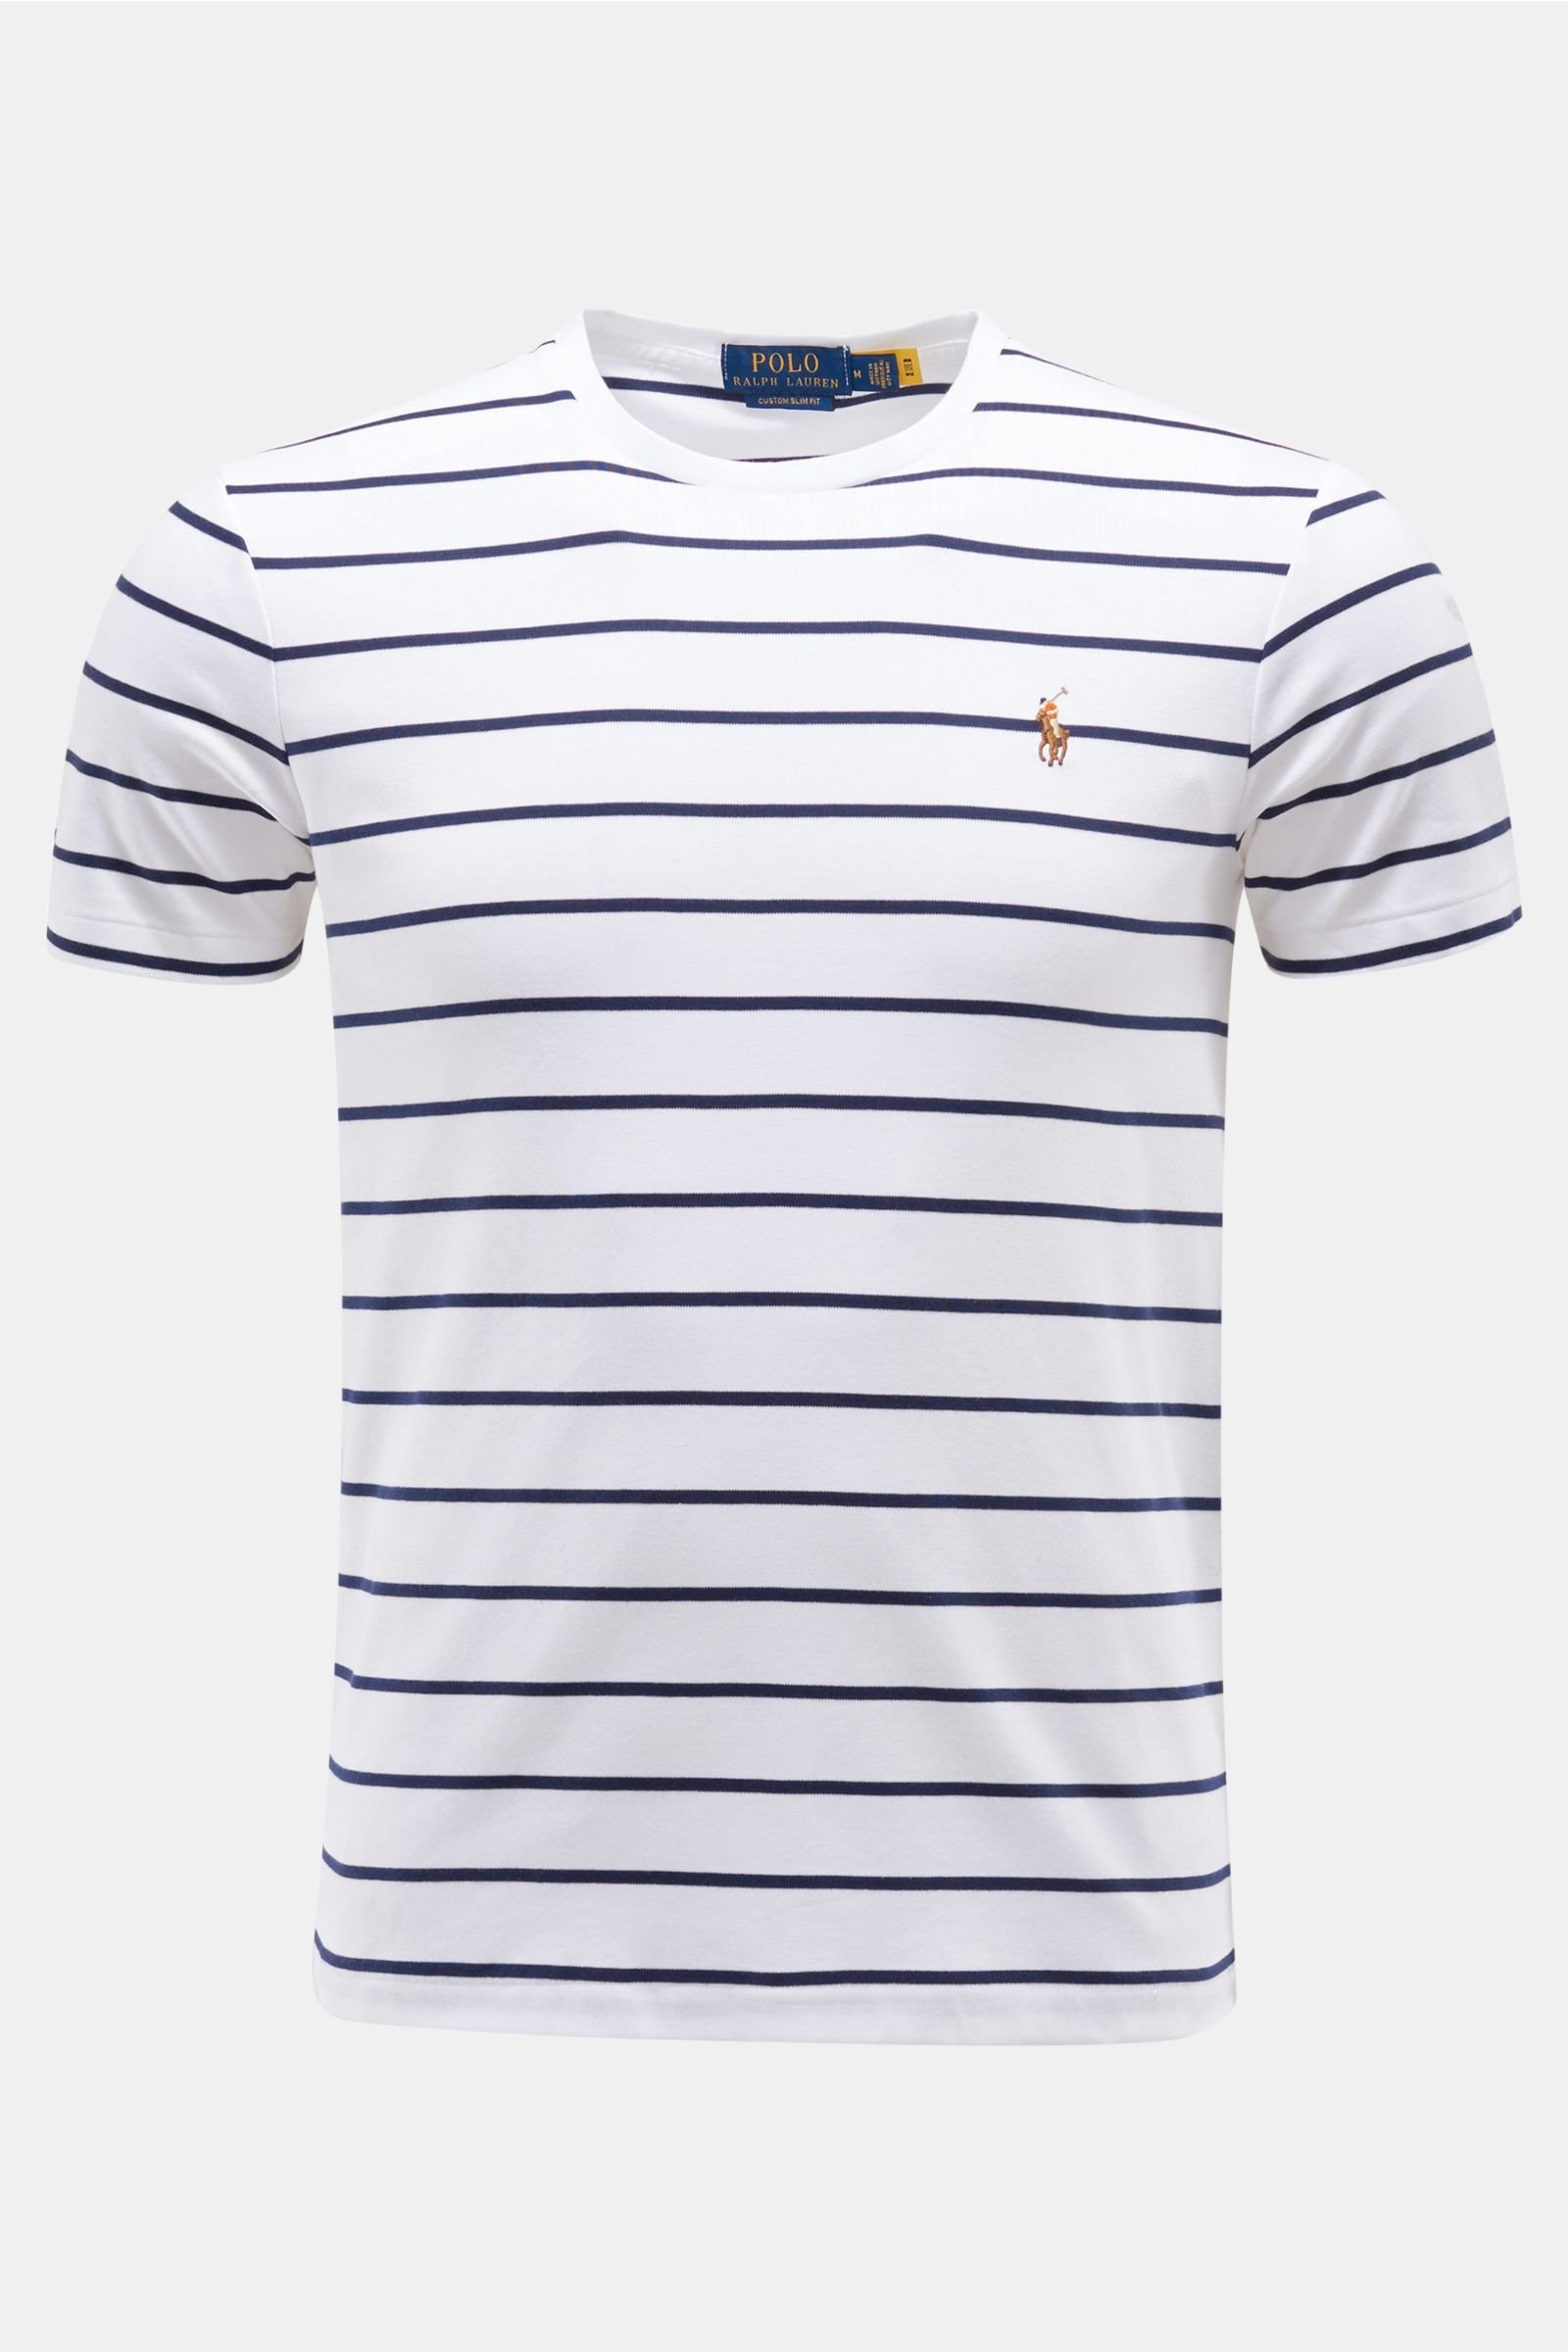 Crew neck T-shirt white/navy striped